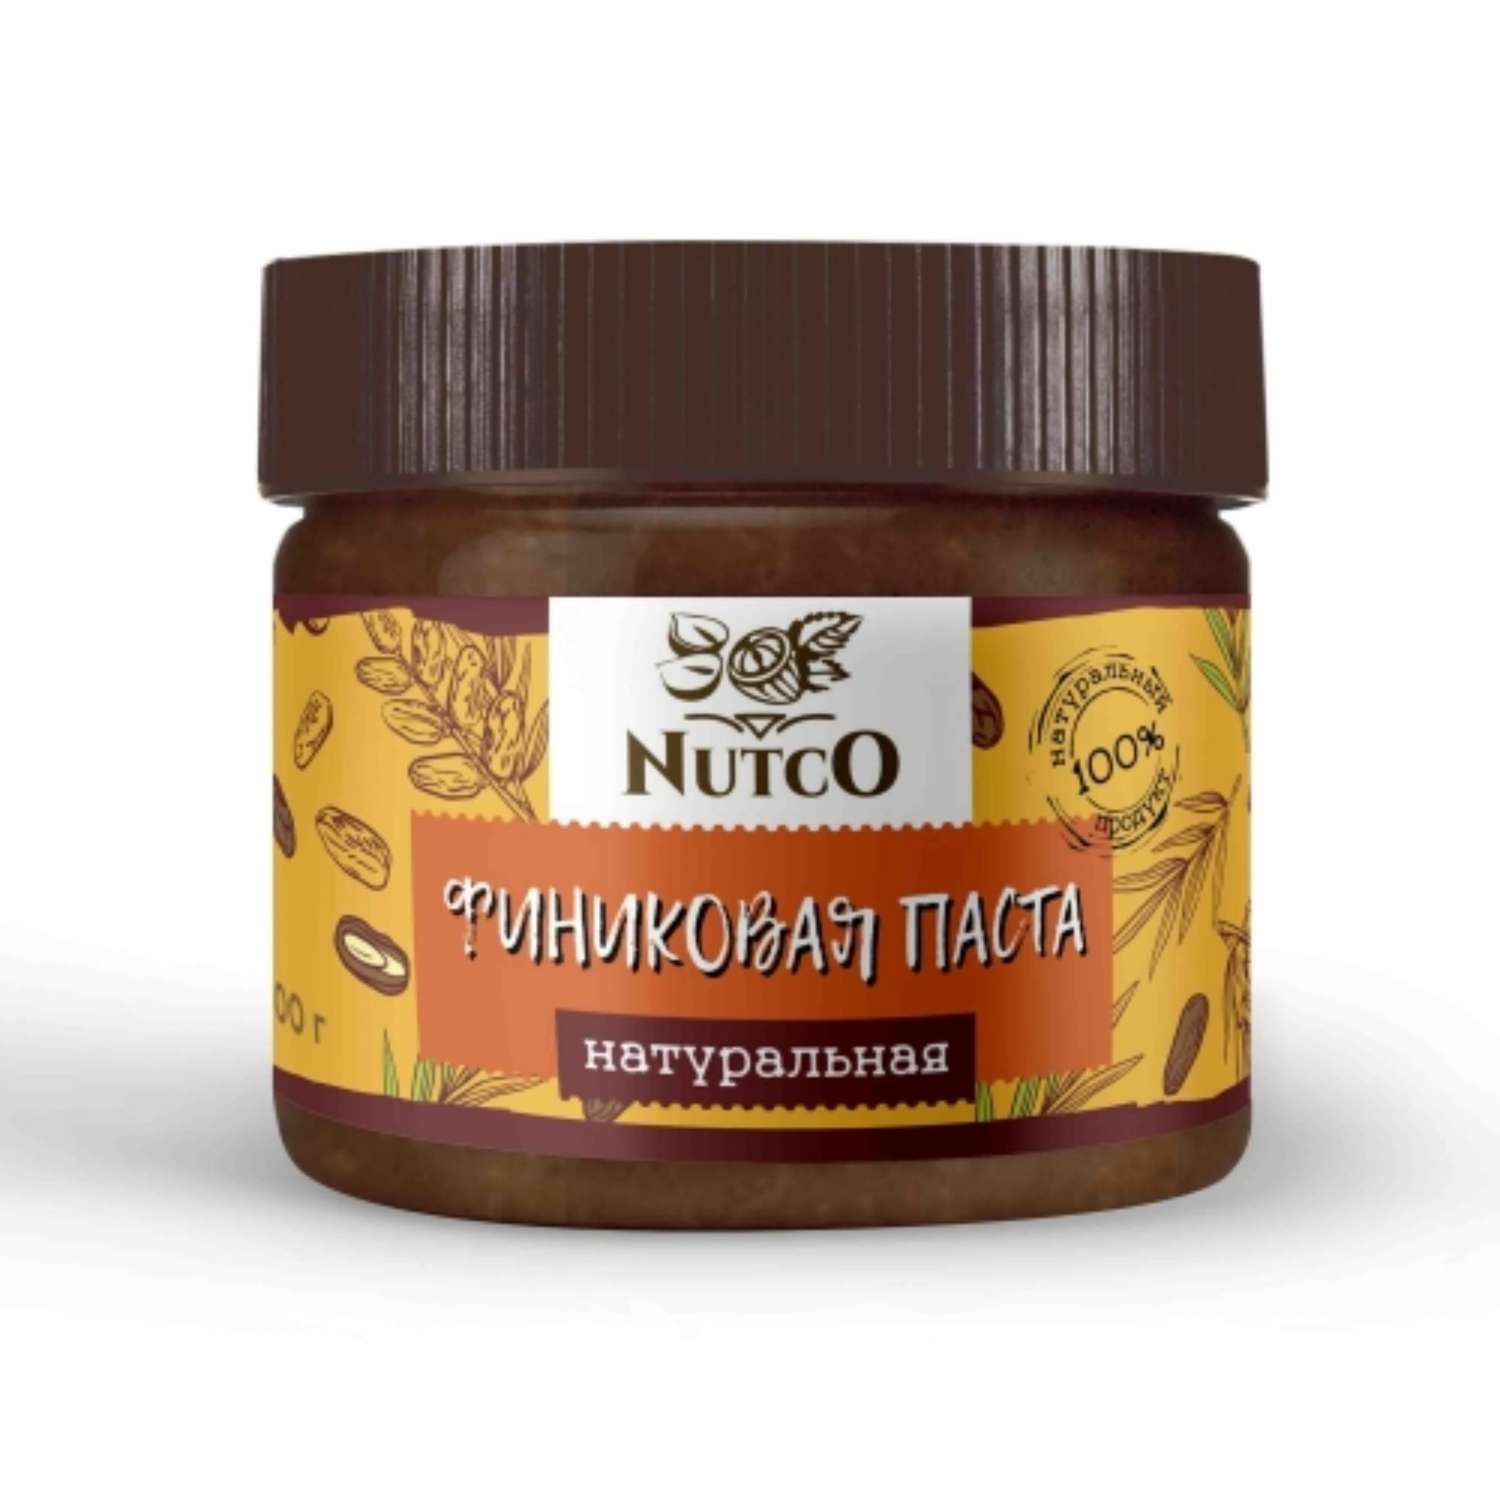 Финиковая паста Nutco натуральная без сахара без добавок 300 г - фото 10